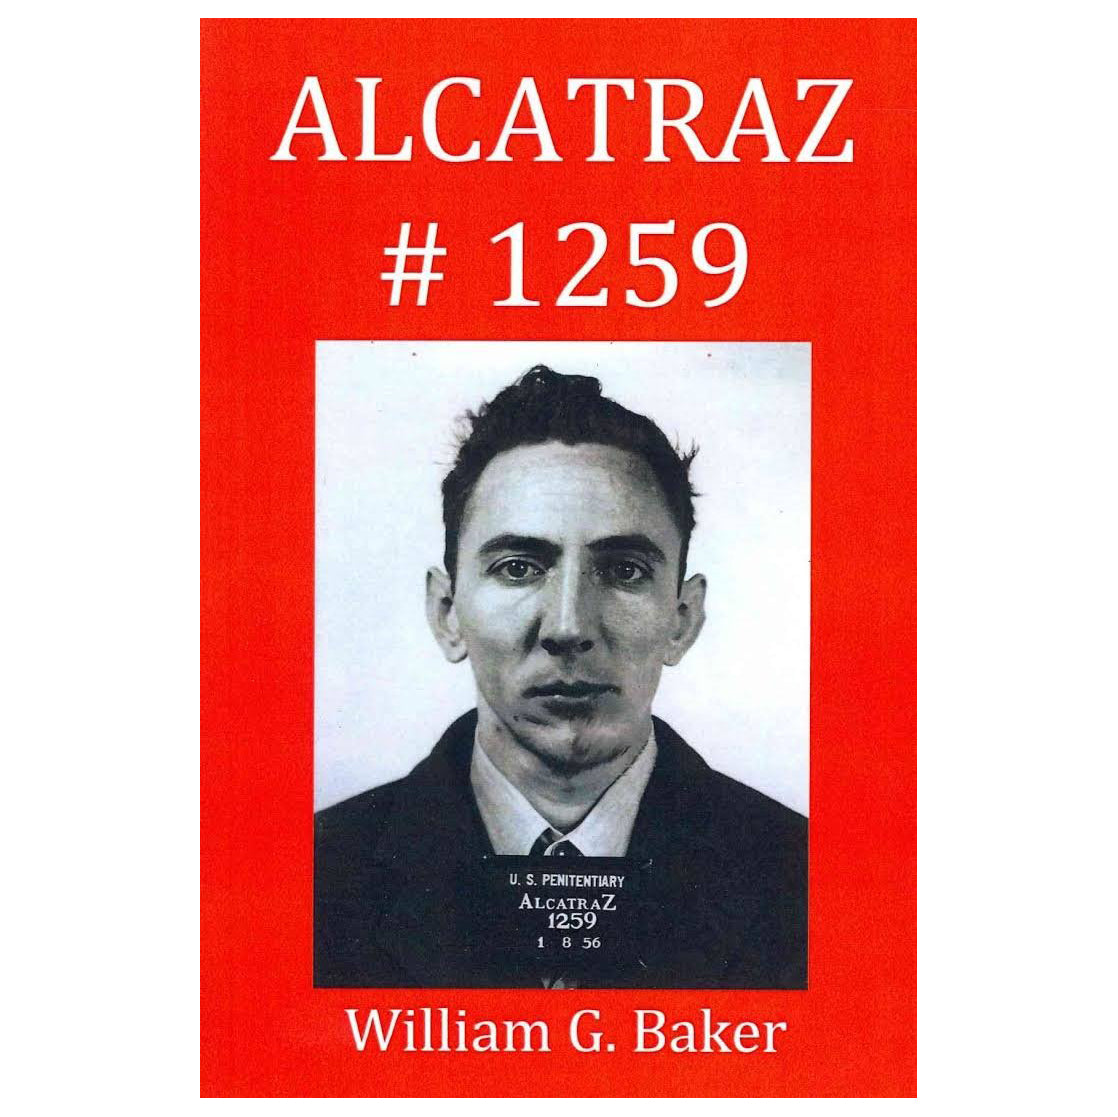 Alcatraz 1259 book by William G. (Bill) Baker, memoir of former US Penitentiary Alcatraz inmate.